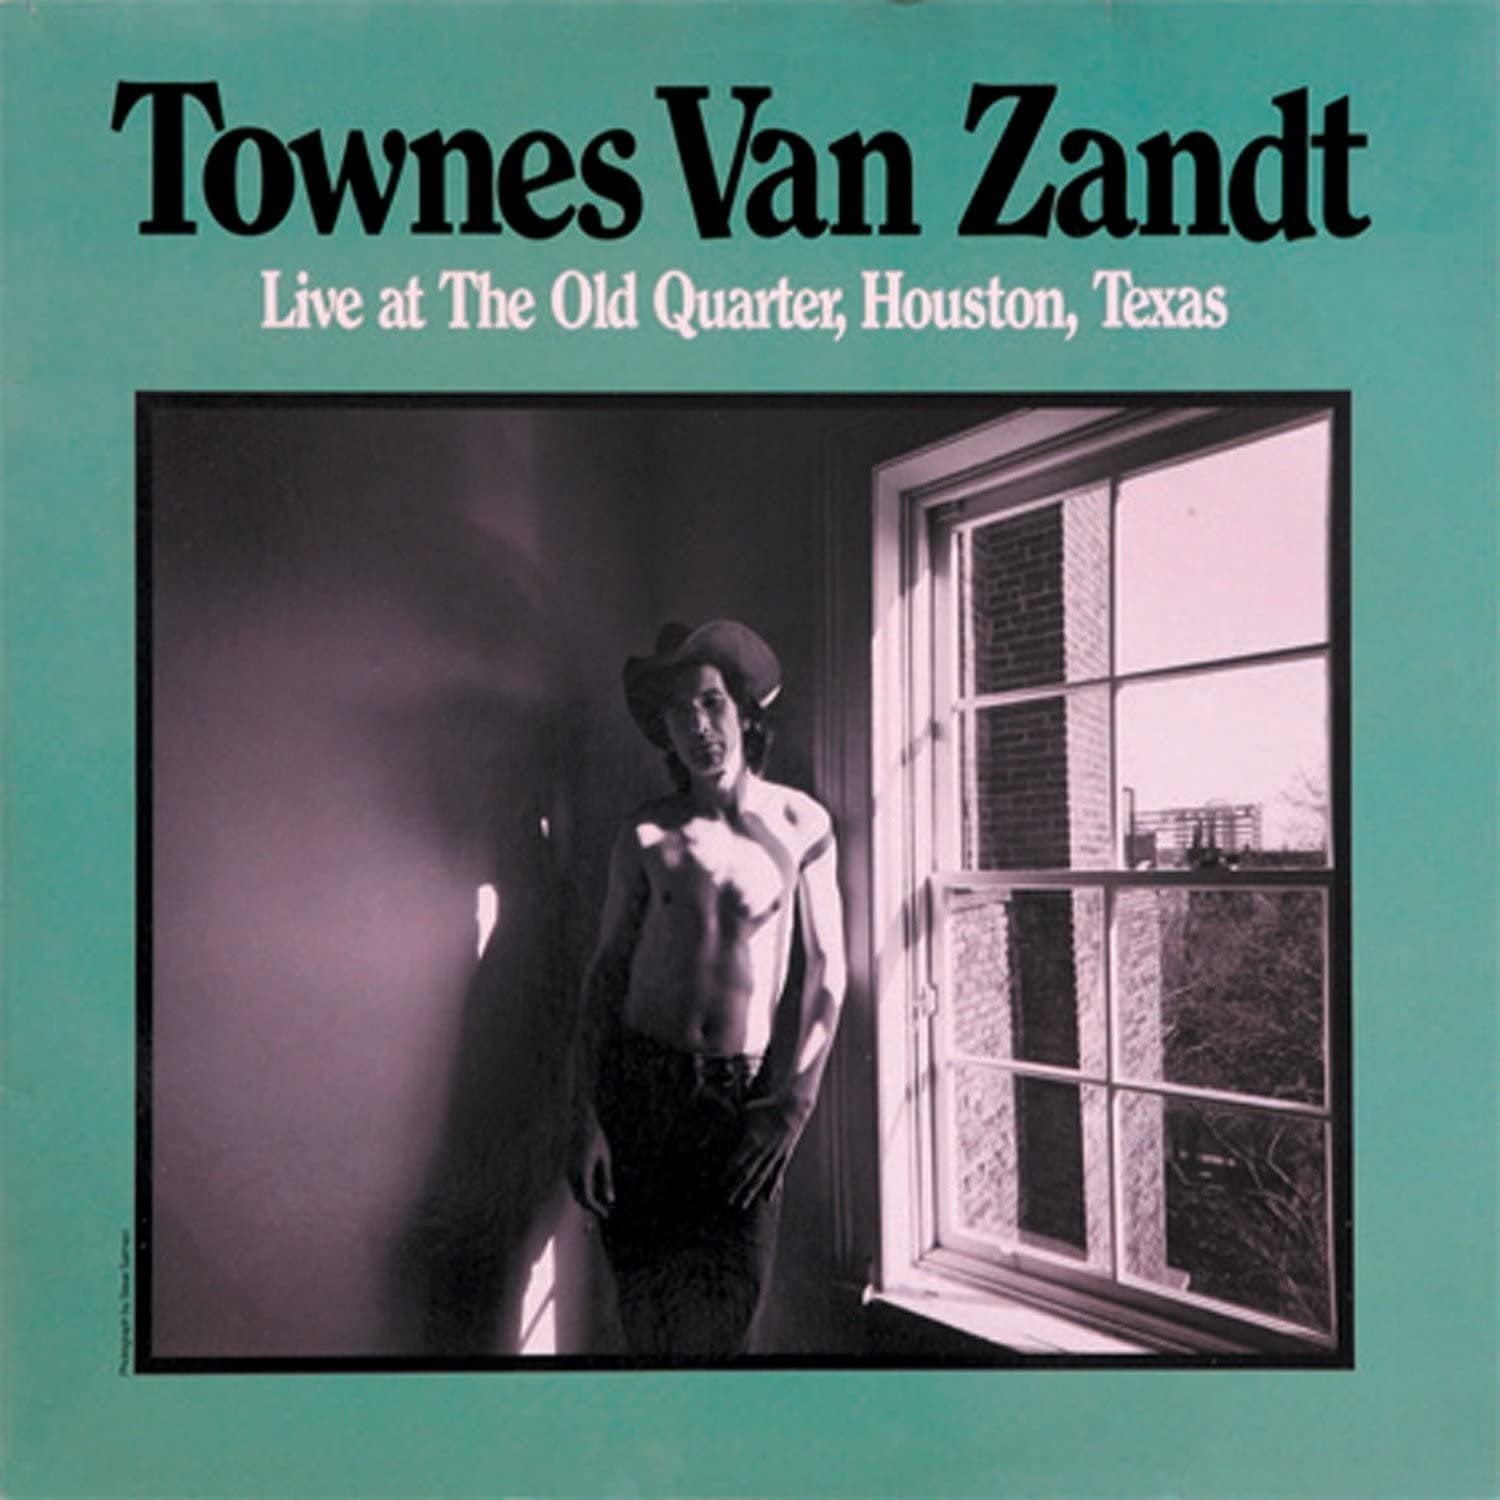 Van Zandt, Townes "Live At The Old Quarter, Houston, Texas" 2LP